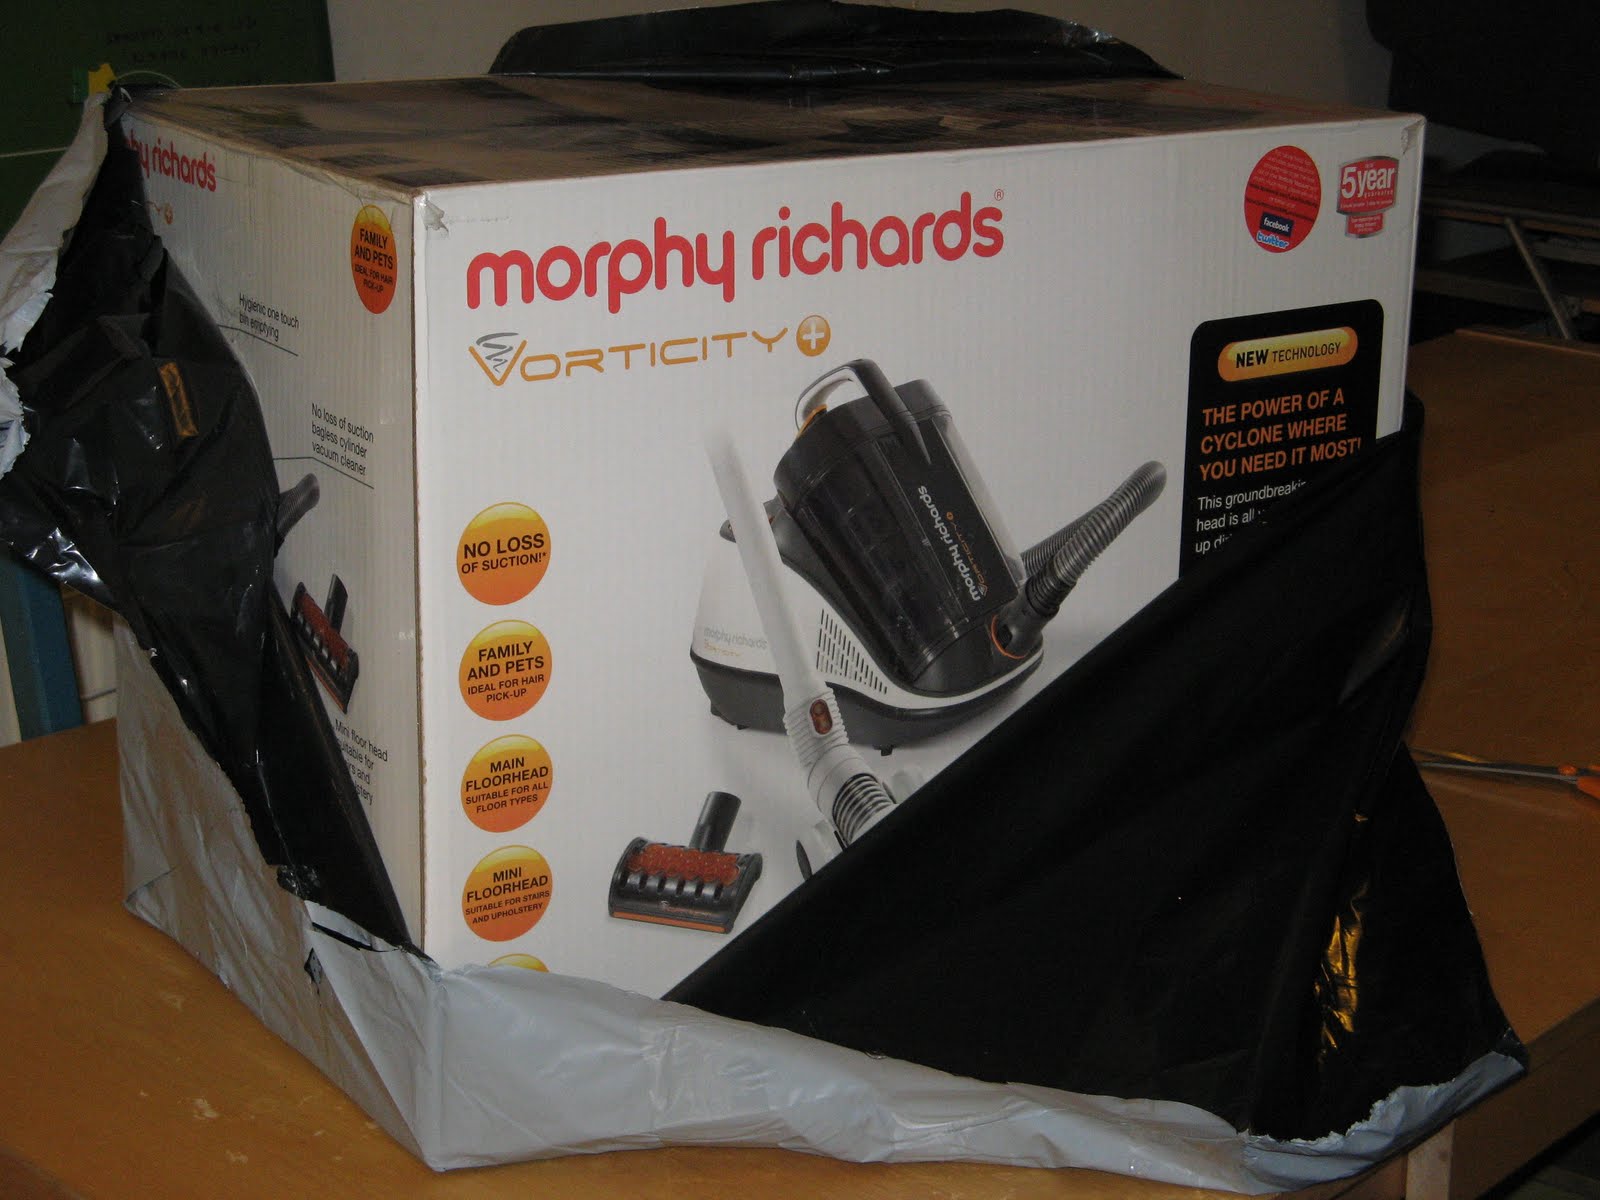 Morphy Richards Vorticity